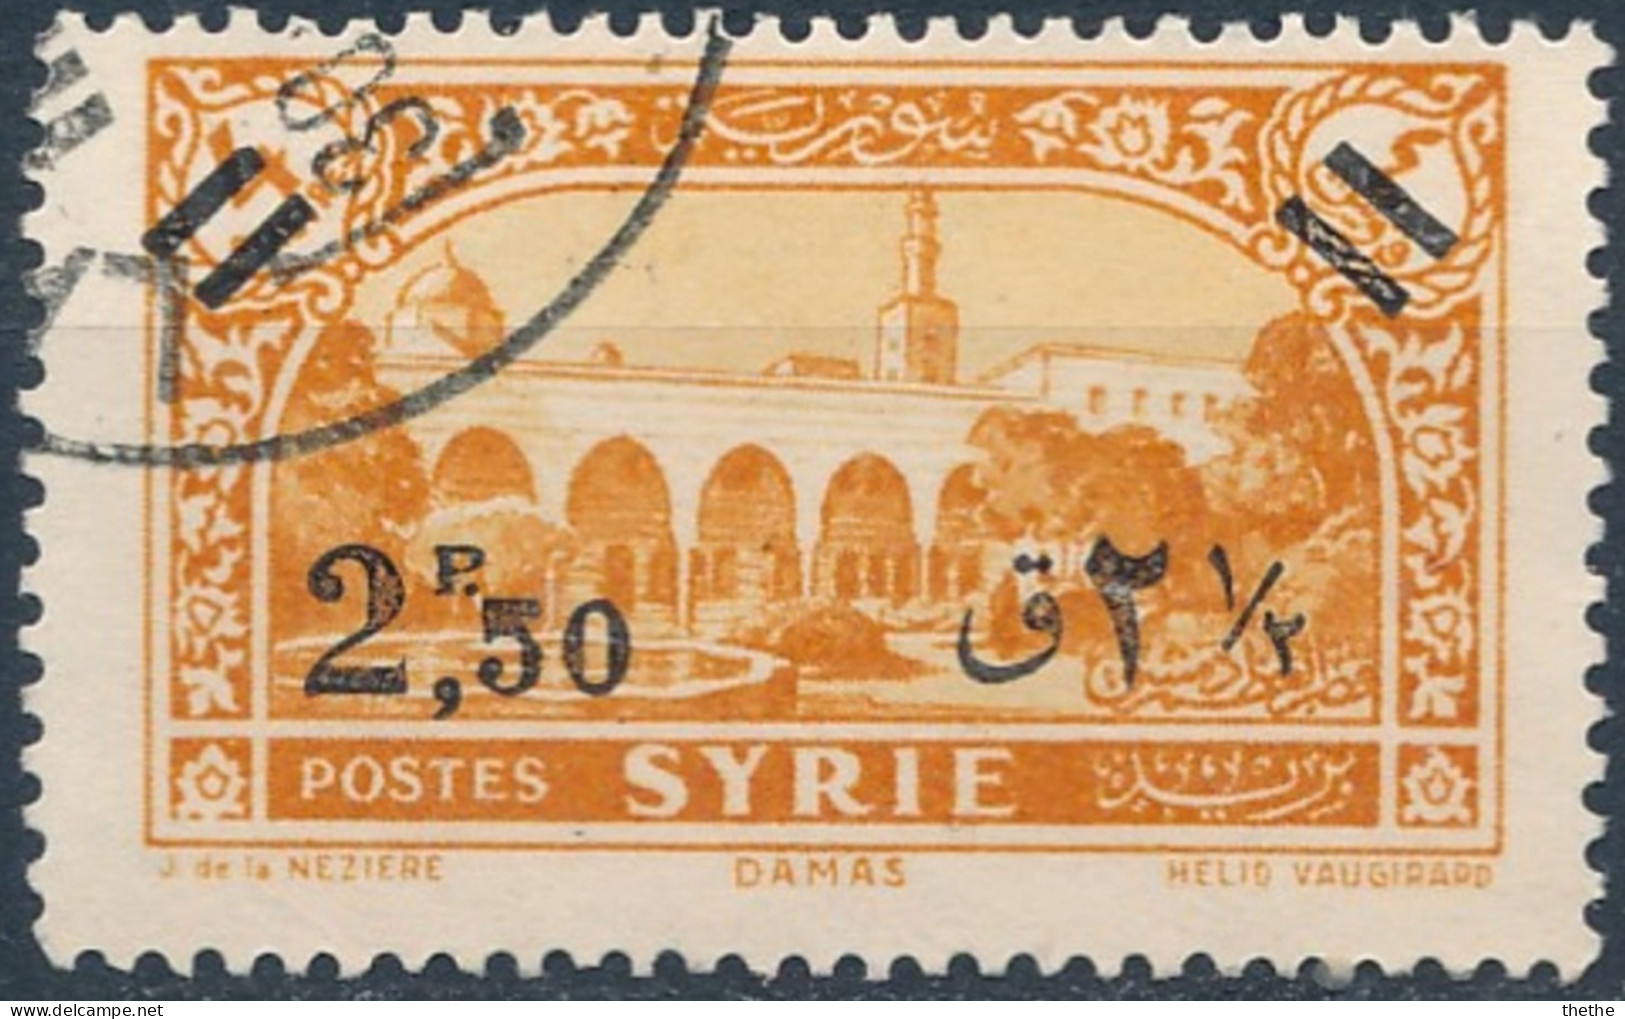 SYRIE - Timbre De 1930-36 Surchargé : Damas - Syria